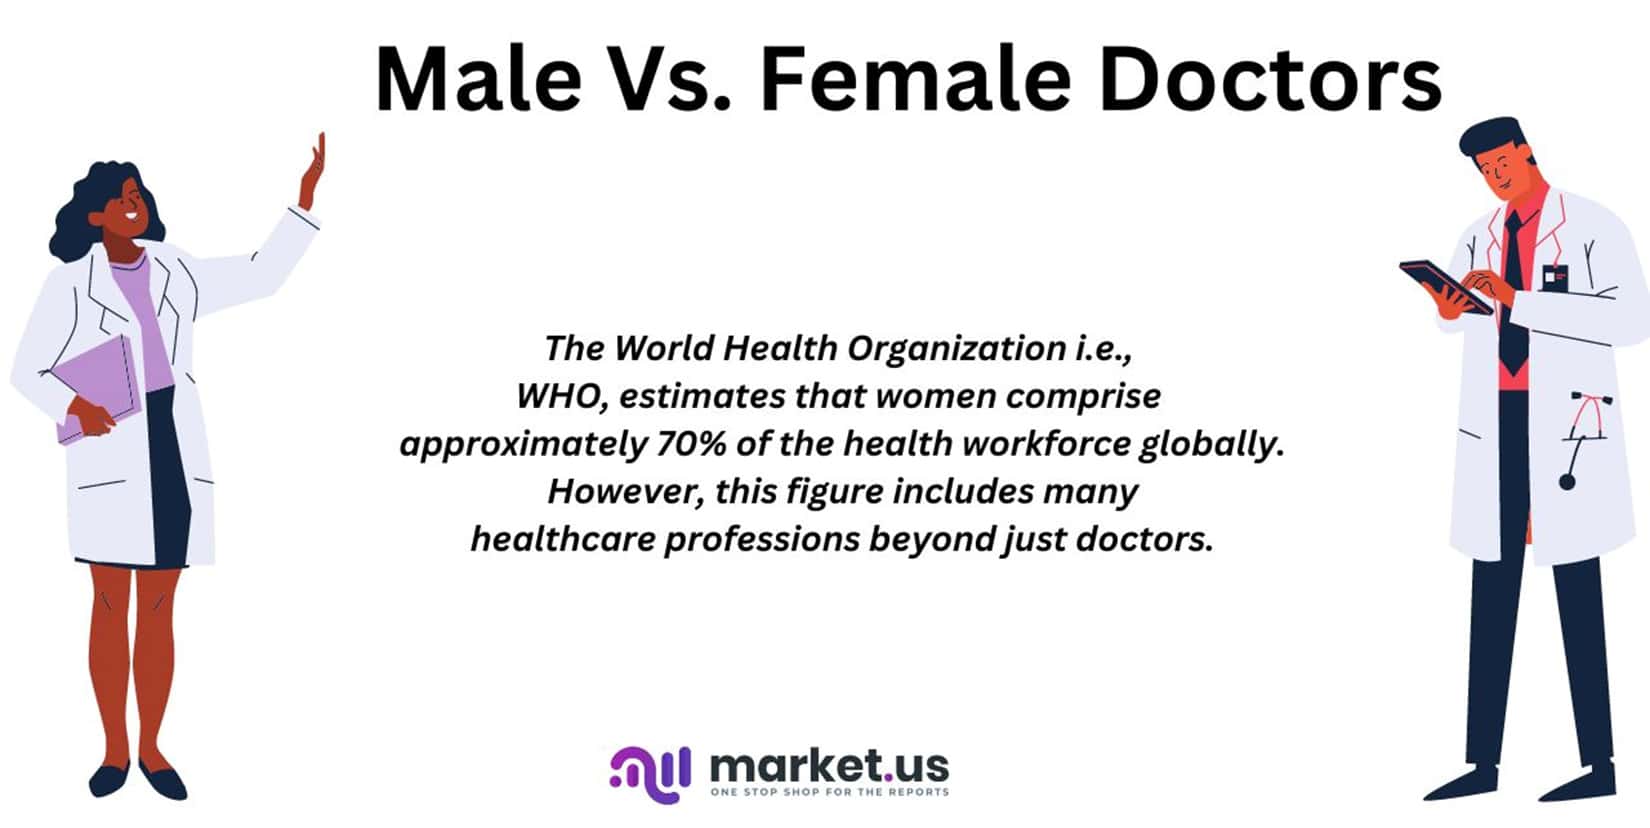 Male vs. Female Doctors Statistics